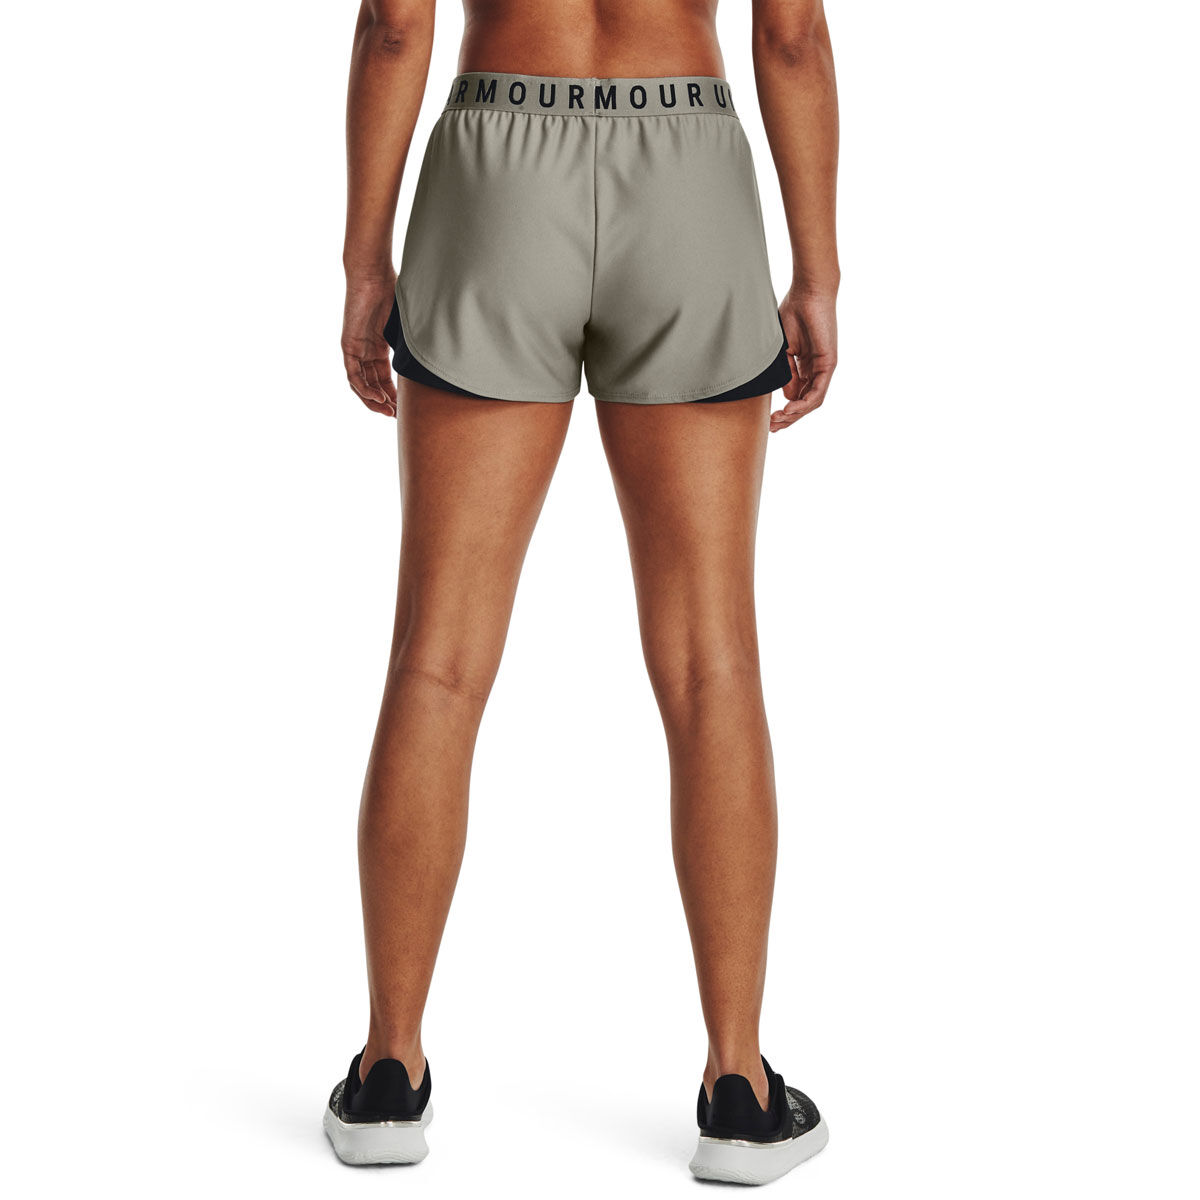 Under Armour Women's Moisture Wicking Play Up 3.0 Gym Shorts, 3 Inseam  (Grey/White, XL) 